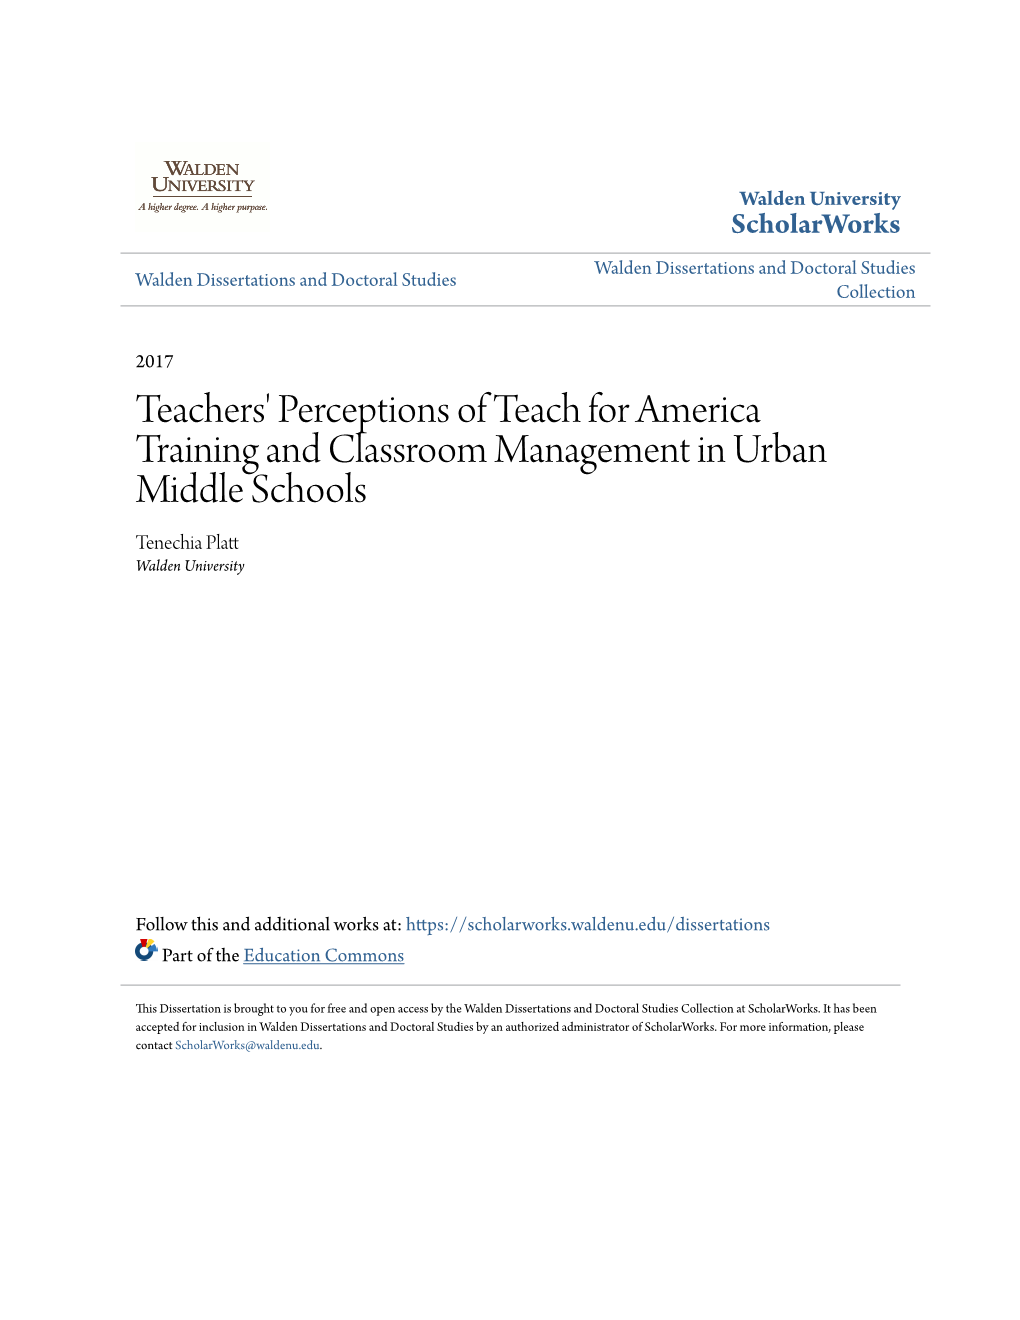 Teachers' Perceptions of Teach for America Training and Classroom Management in Urban Middle Schools Tenechia Platt Walden University